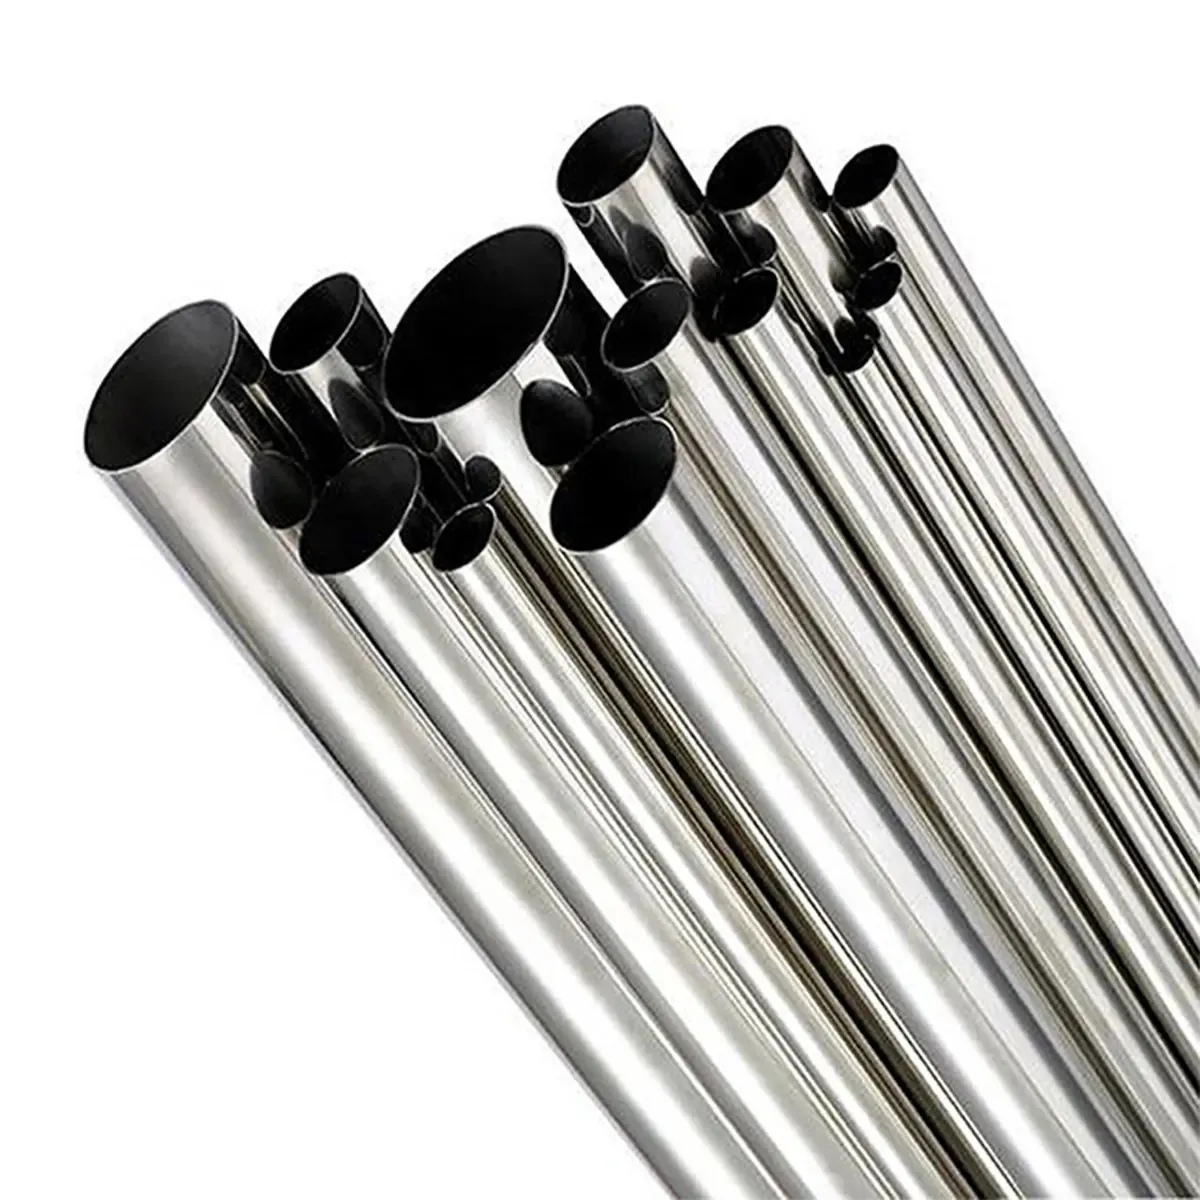 Tubo pulica redondo de aço inoxidável 304l 316 316l 310 310s 321 tubo de aço 8mm 150mm fabricar tubos de aço inoxidável